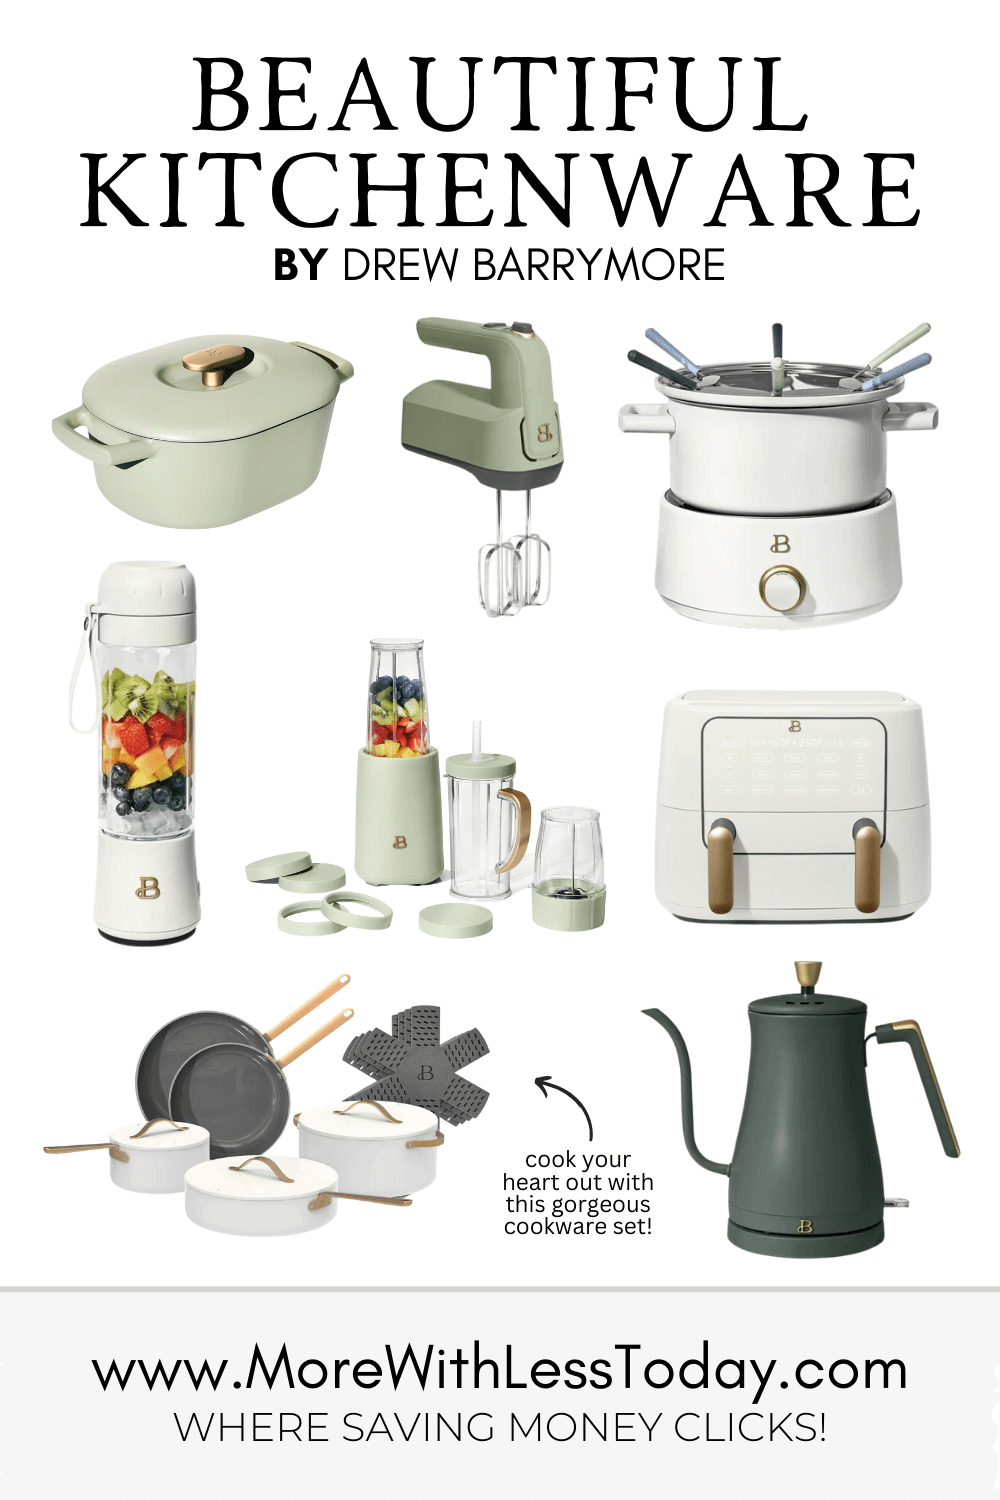 Beautiful Kitchenware by Drew Barrymore at Walmart